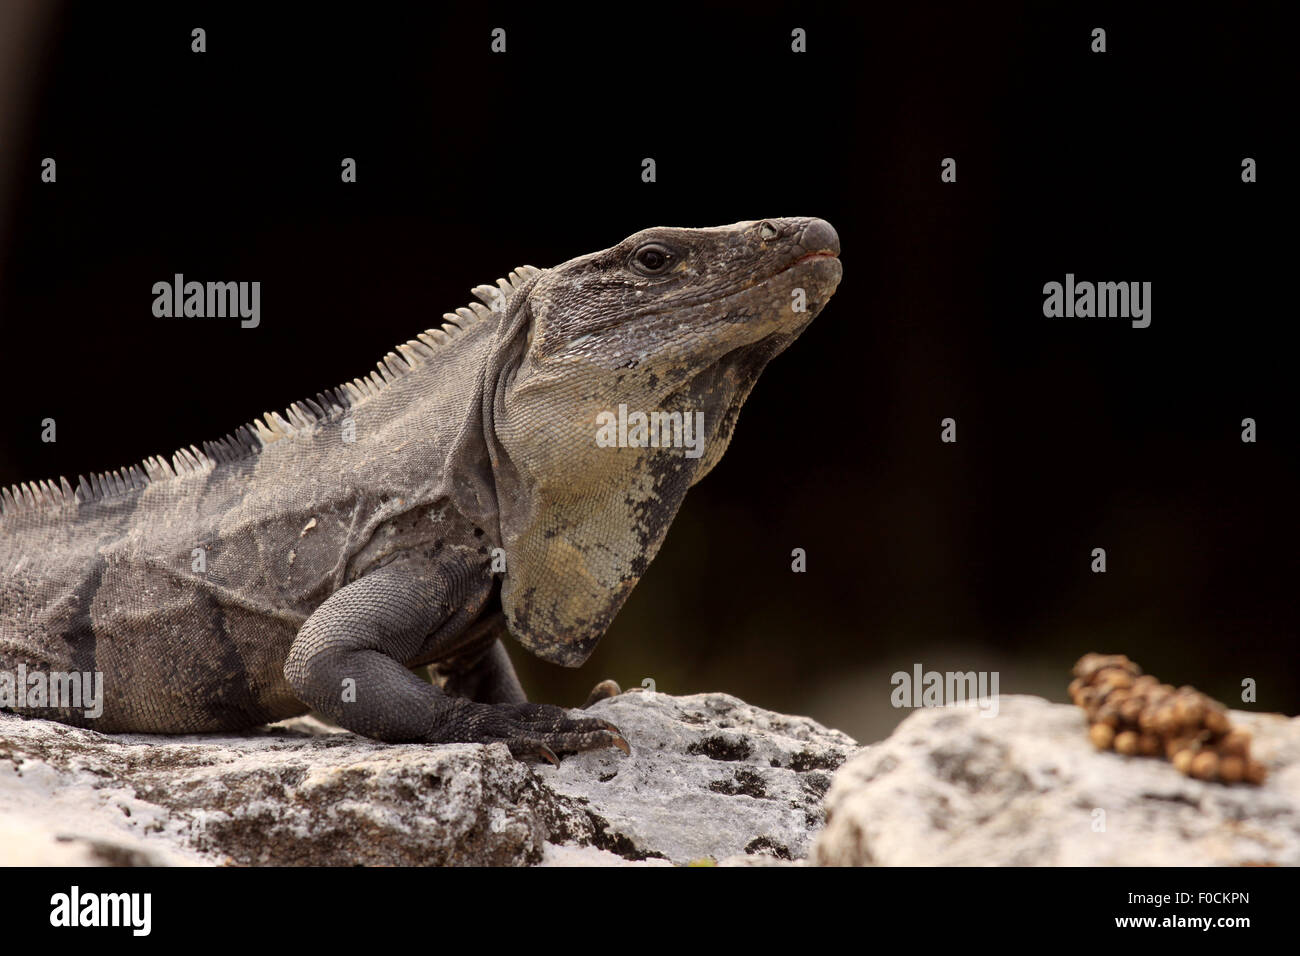 Dramatic photo of a handsome iguana basking in sun Stock Photo